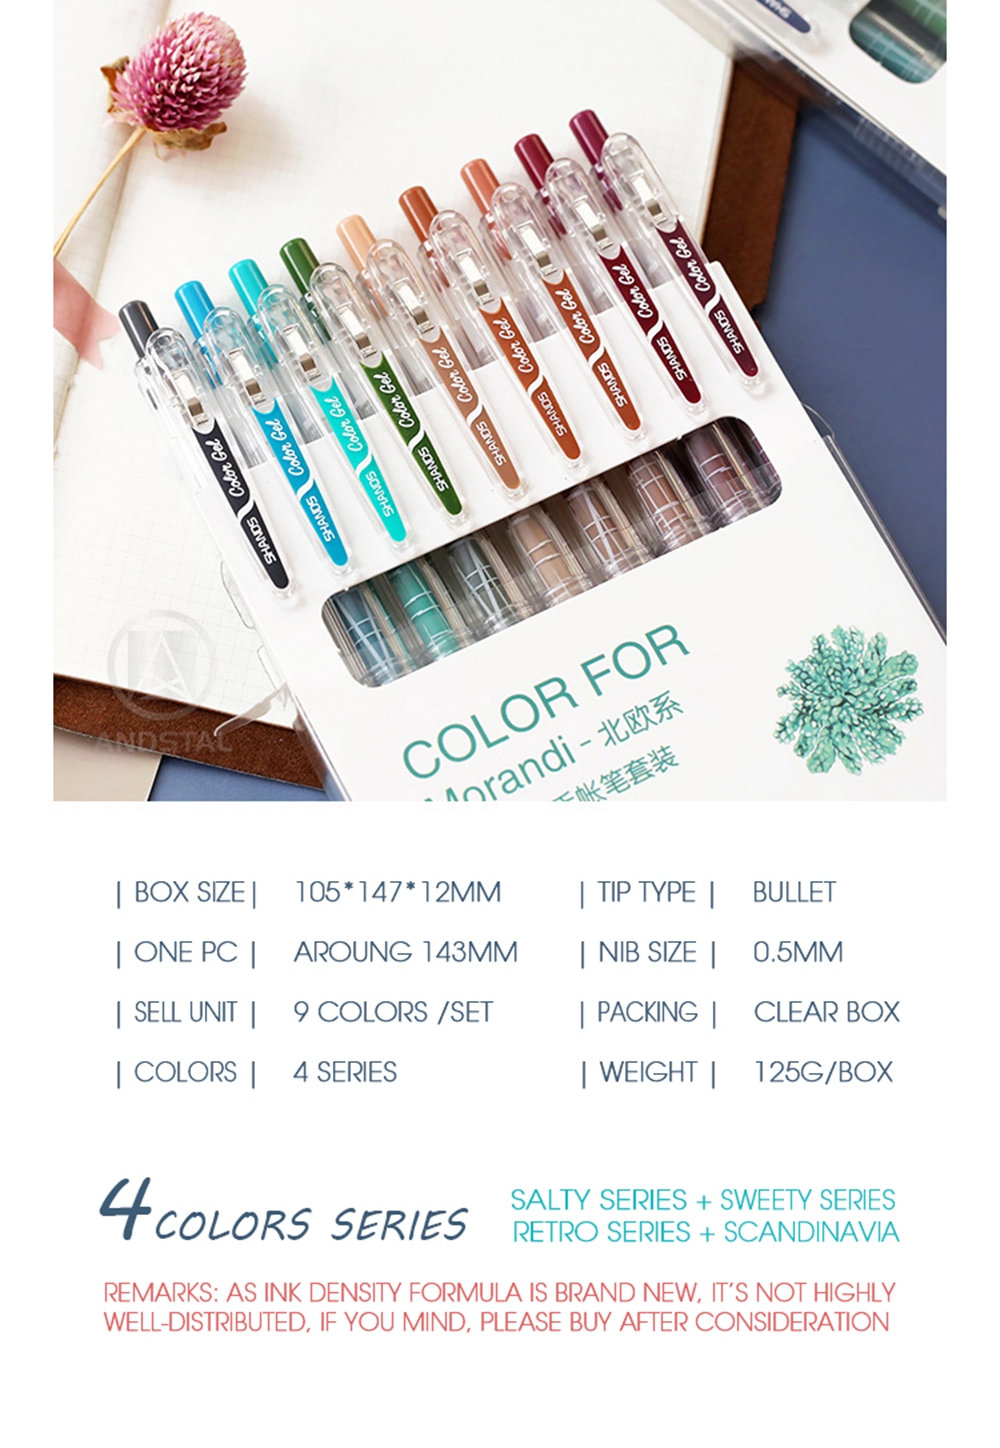 Morandi-9-Pcsset-Marker-Pens-05mm-Scrapbooking-Paper-Craft-Colored-Multi-Color-Rainbow-Graffiti-Writ-1655711-3